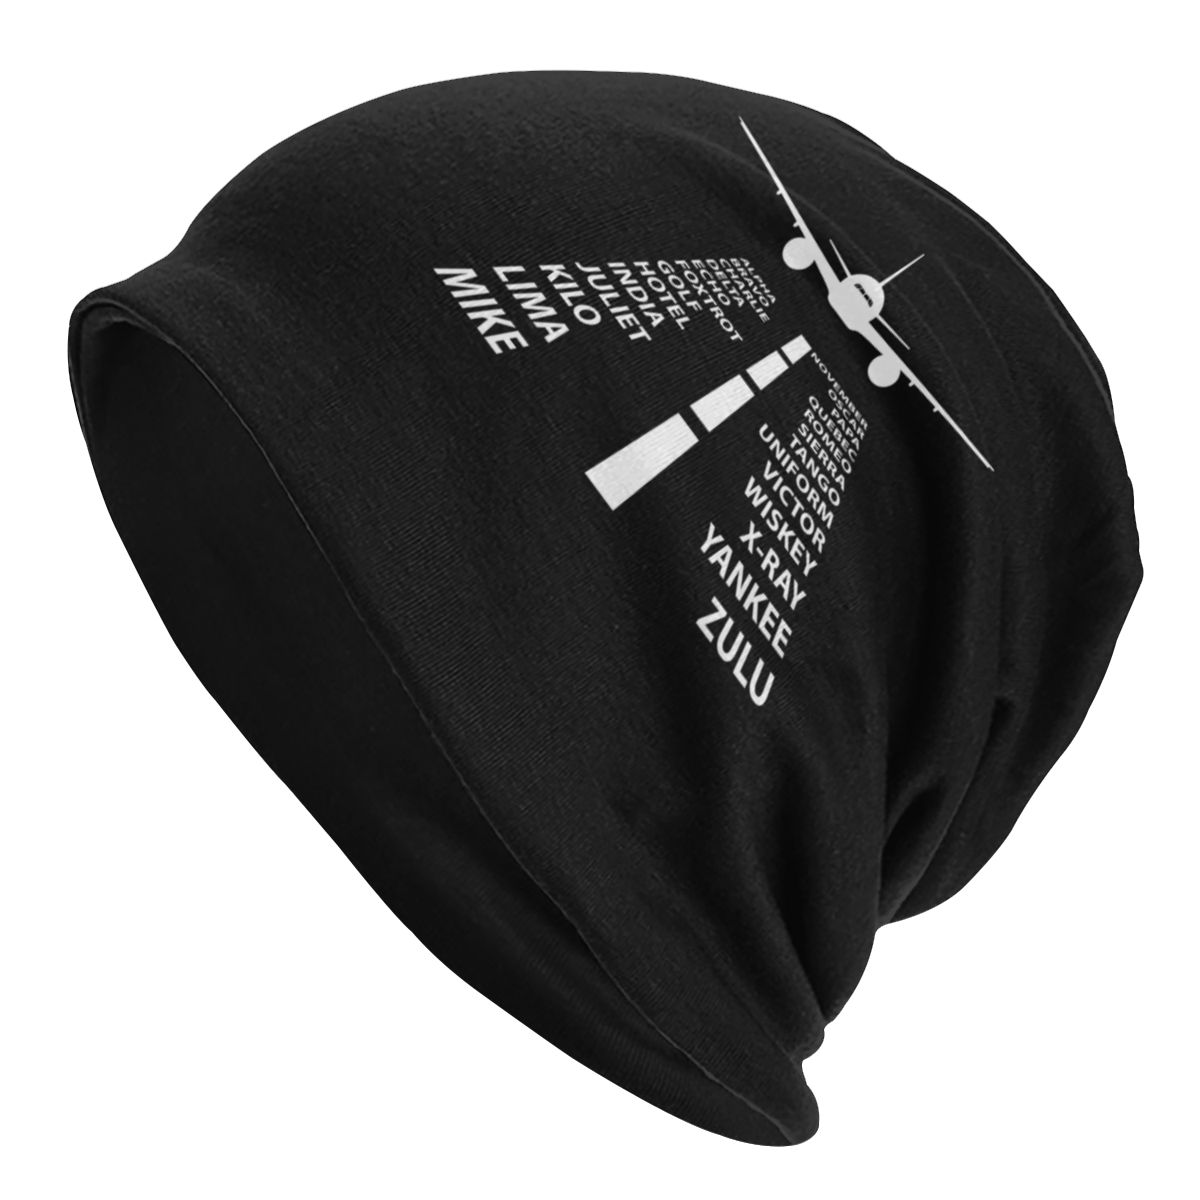 Airport Runway Traffic Controller Beanies Caps Unisex Winter Warm Knitting Hat Adult Aviation Airplane Pilot Aviator Bonnet Hats